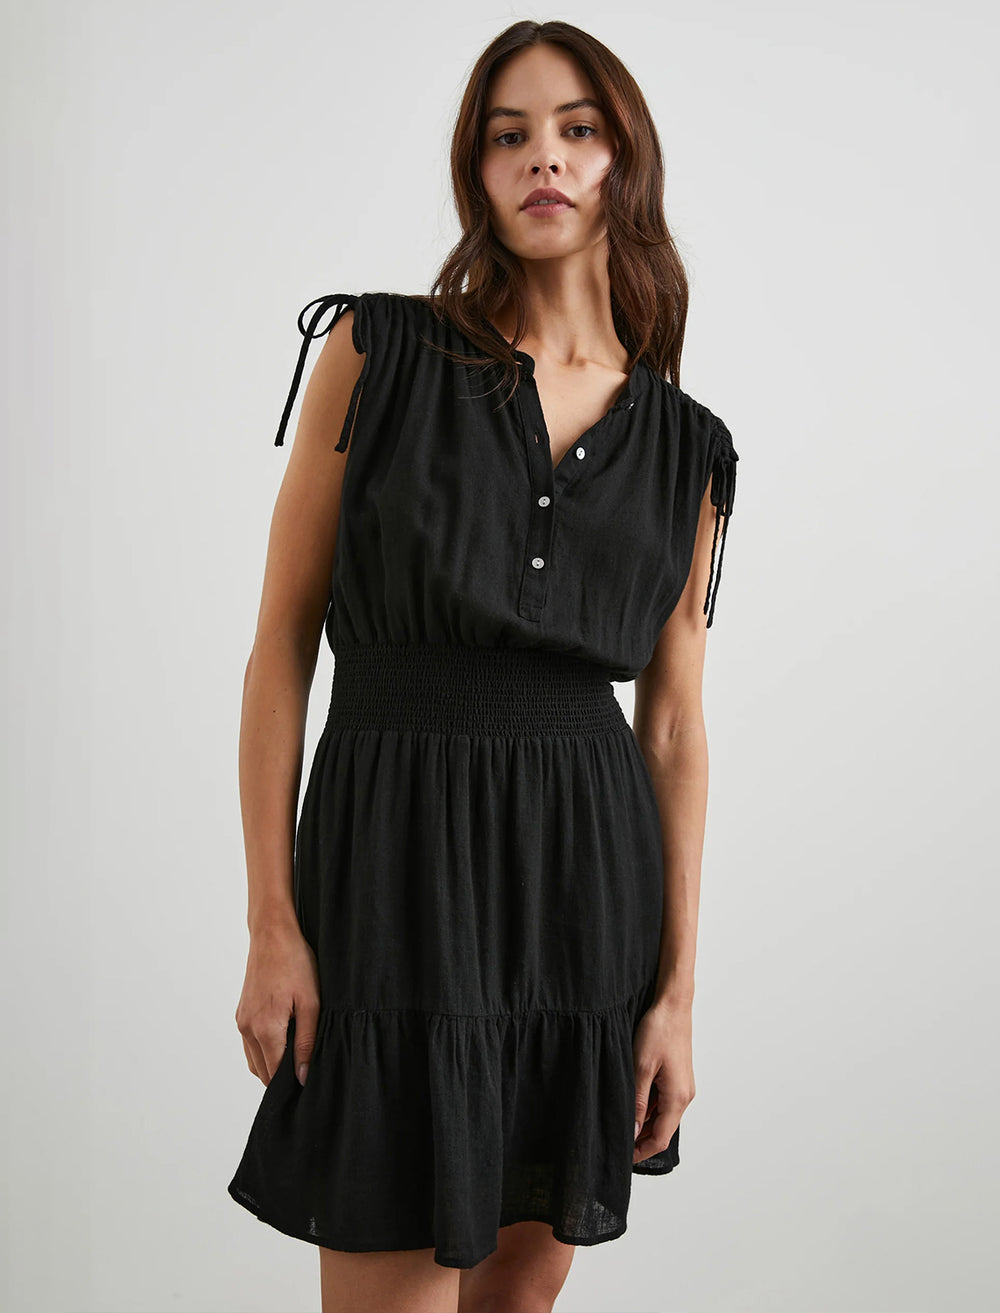 Model wearing Rails' samina dress in black.